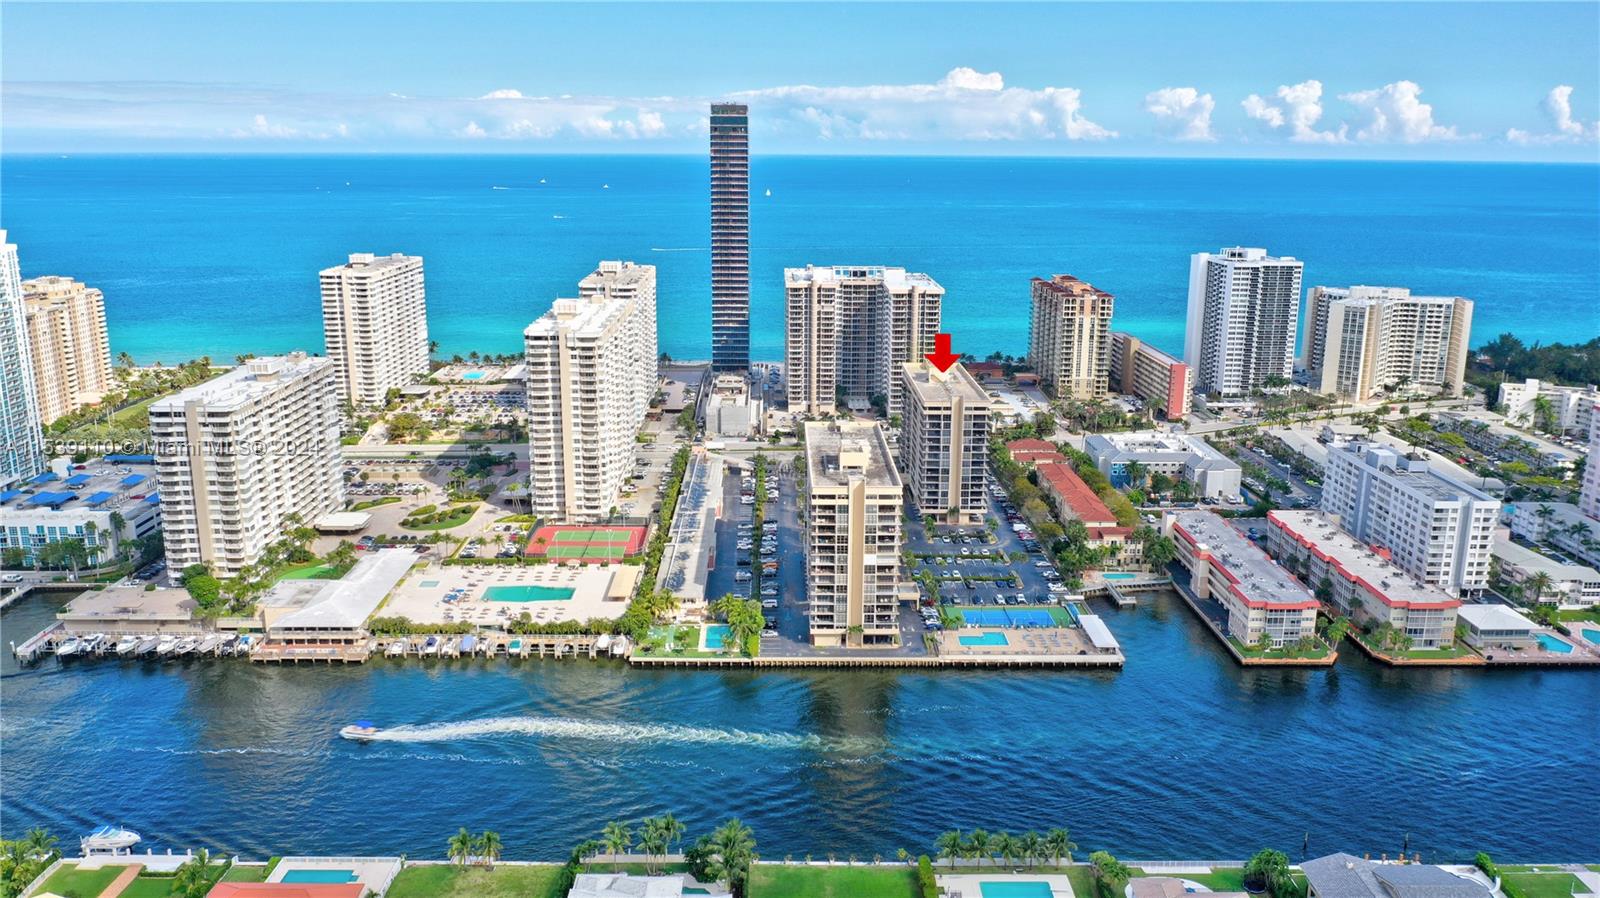 Property for Sale at 2049 S Ocean Dr 702E, Hallandale Beach, Broward County, Florida - Bedrooms: 2 
Bathrooms: 2  - $695,000